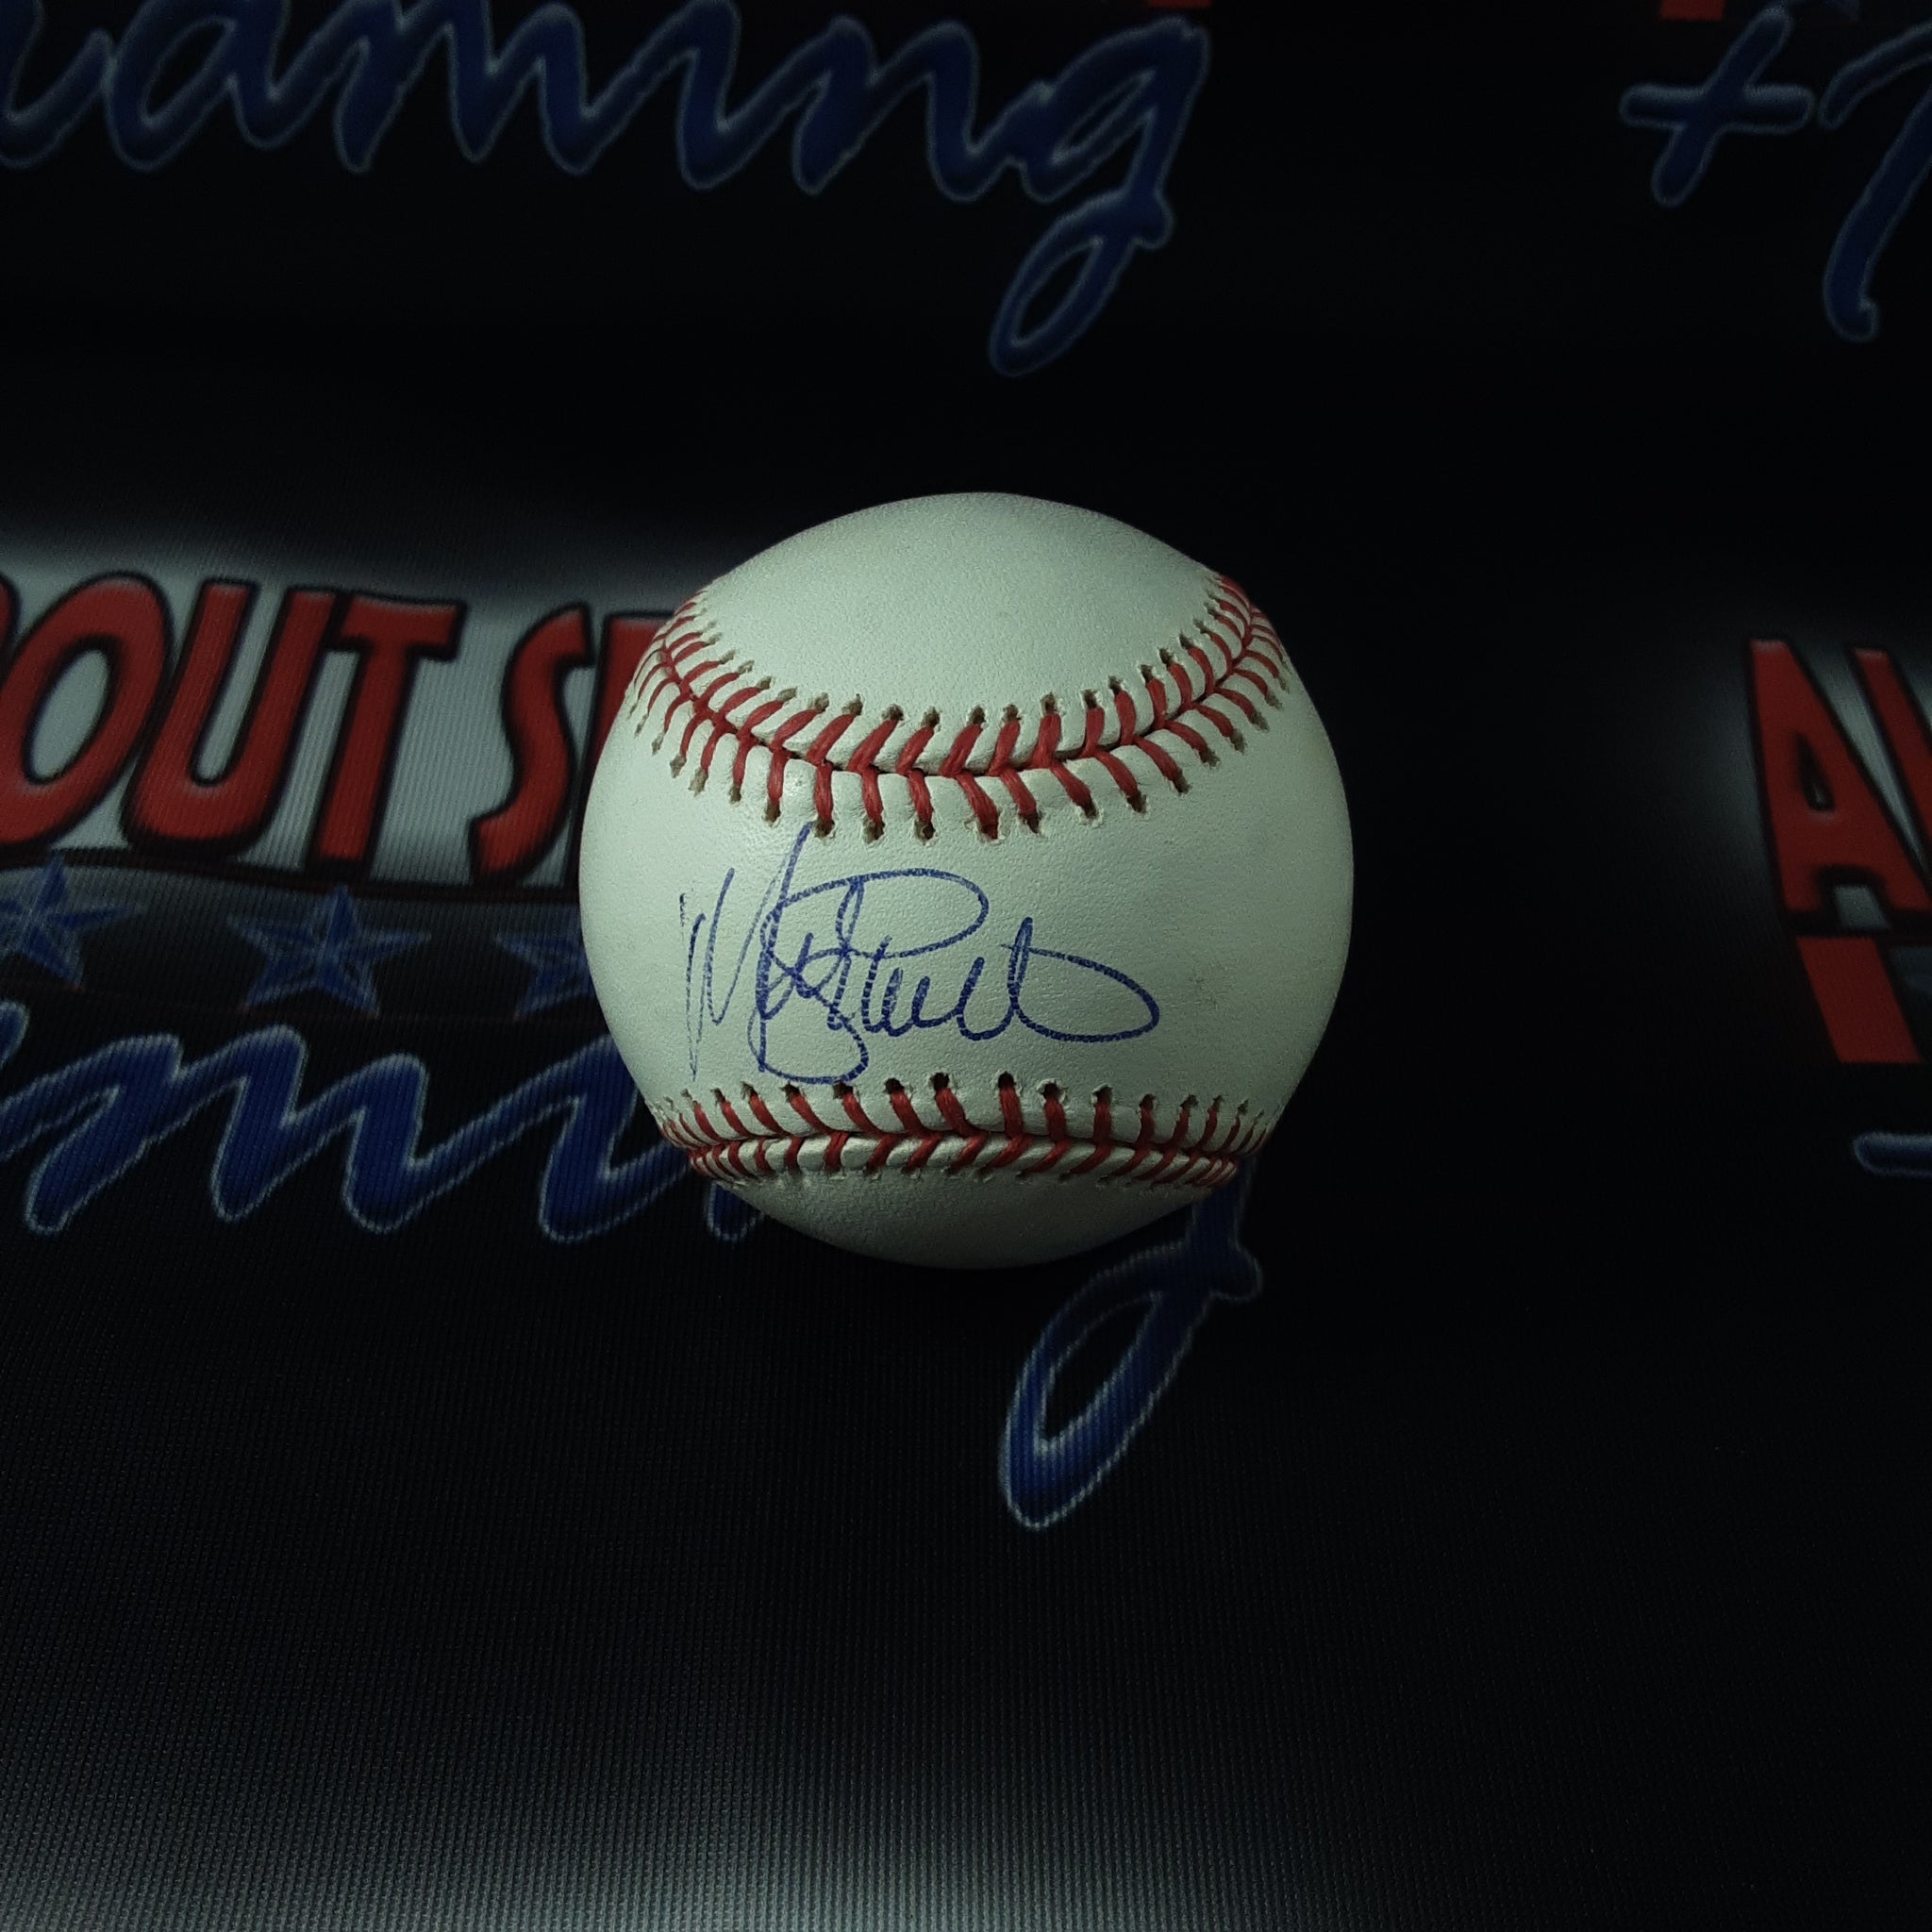 Mike Schmidt Authentic Signed Baseball Autographed JSA.